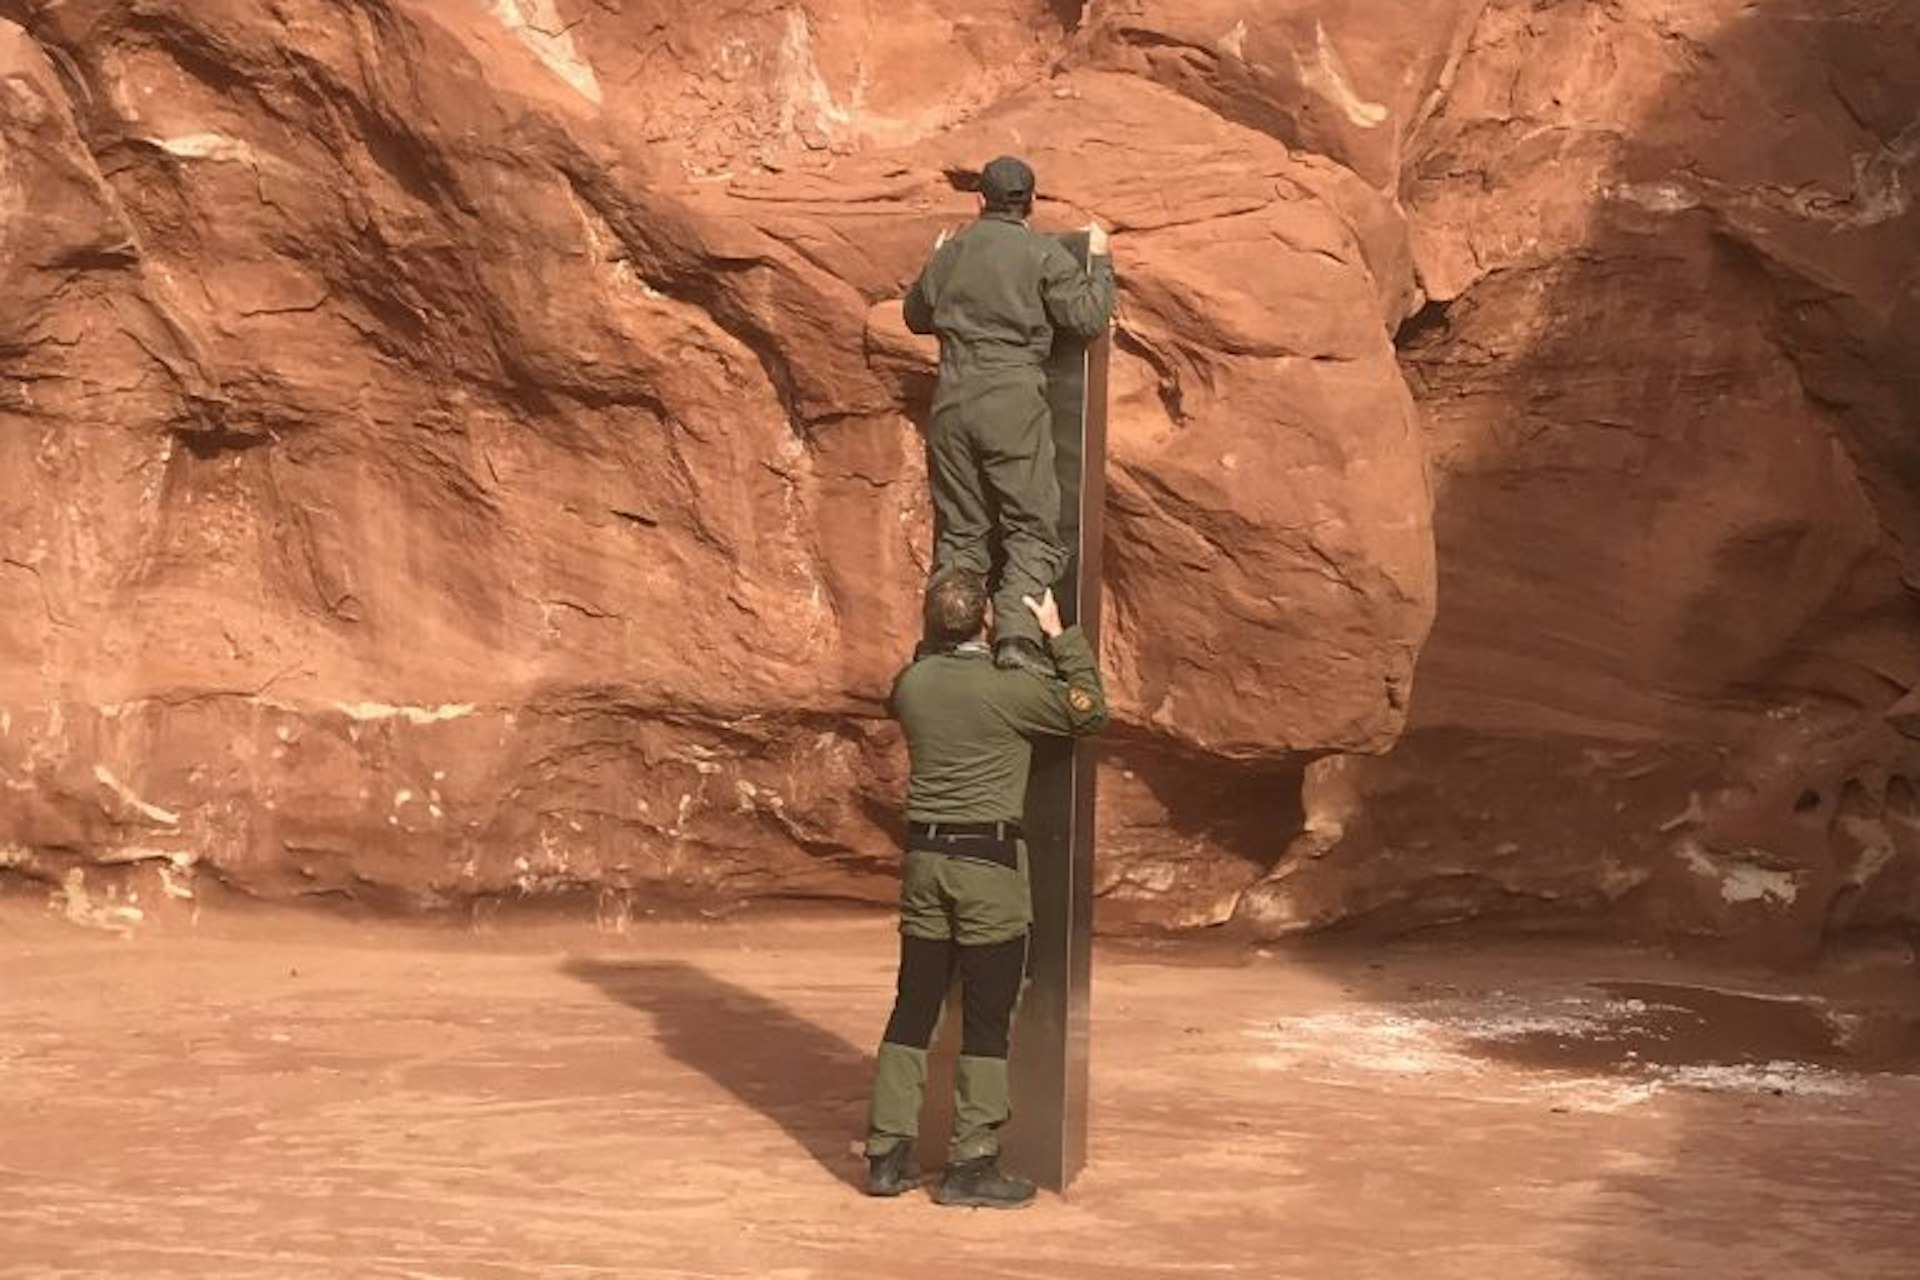 Two men examining a metal monolith found in Utah